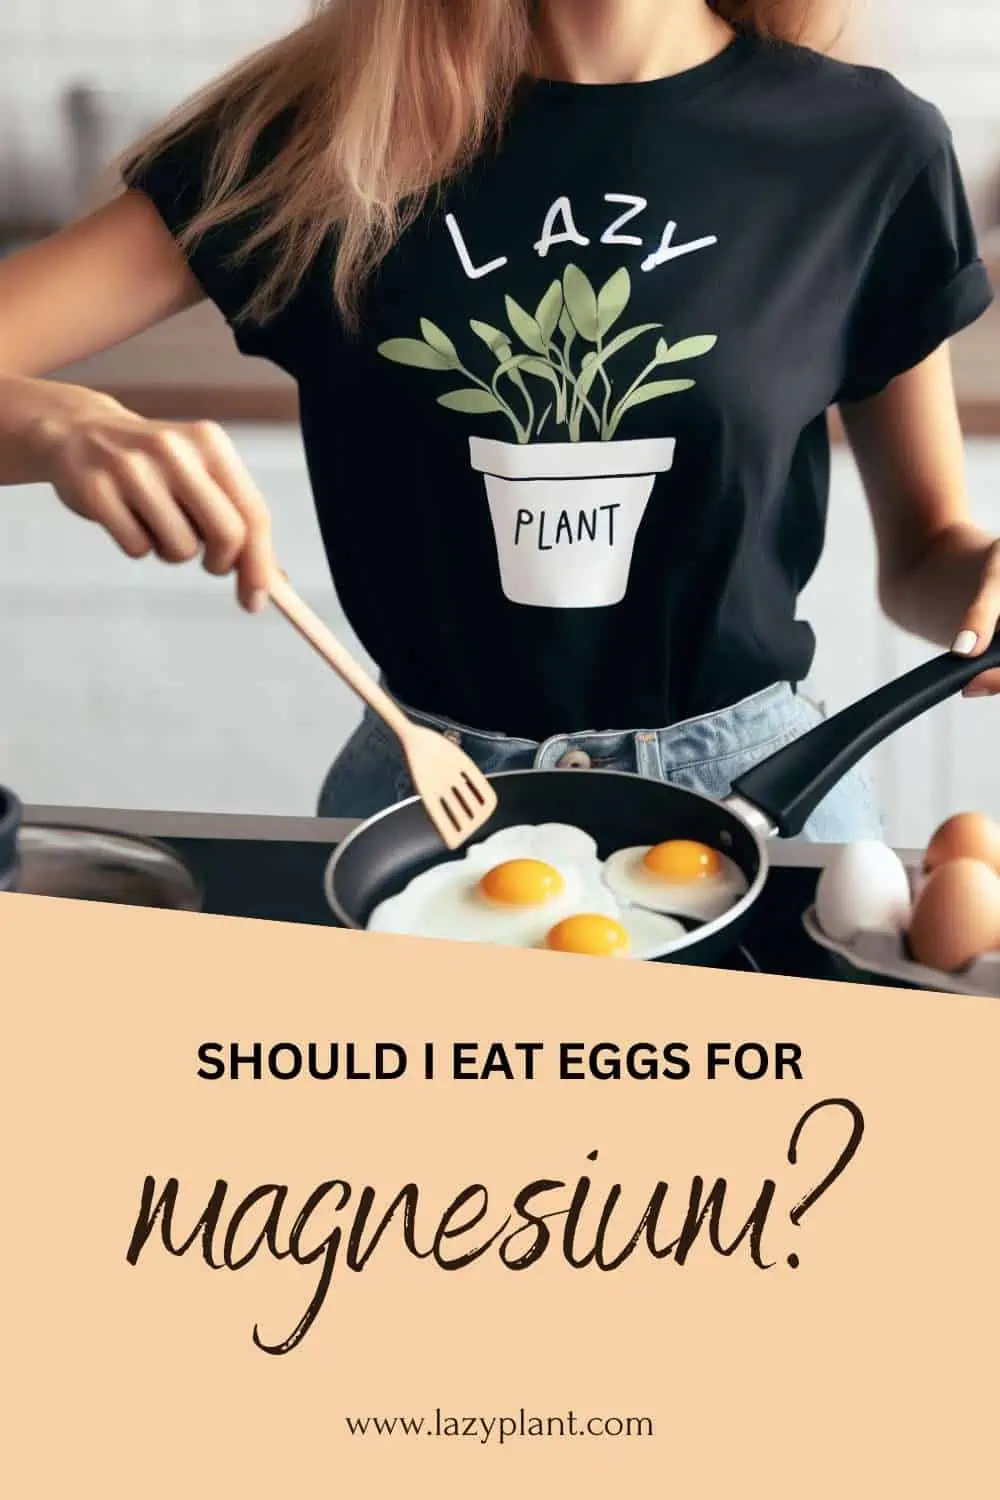 Egg recipe ideas for increased magnesium intake!